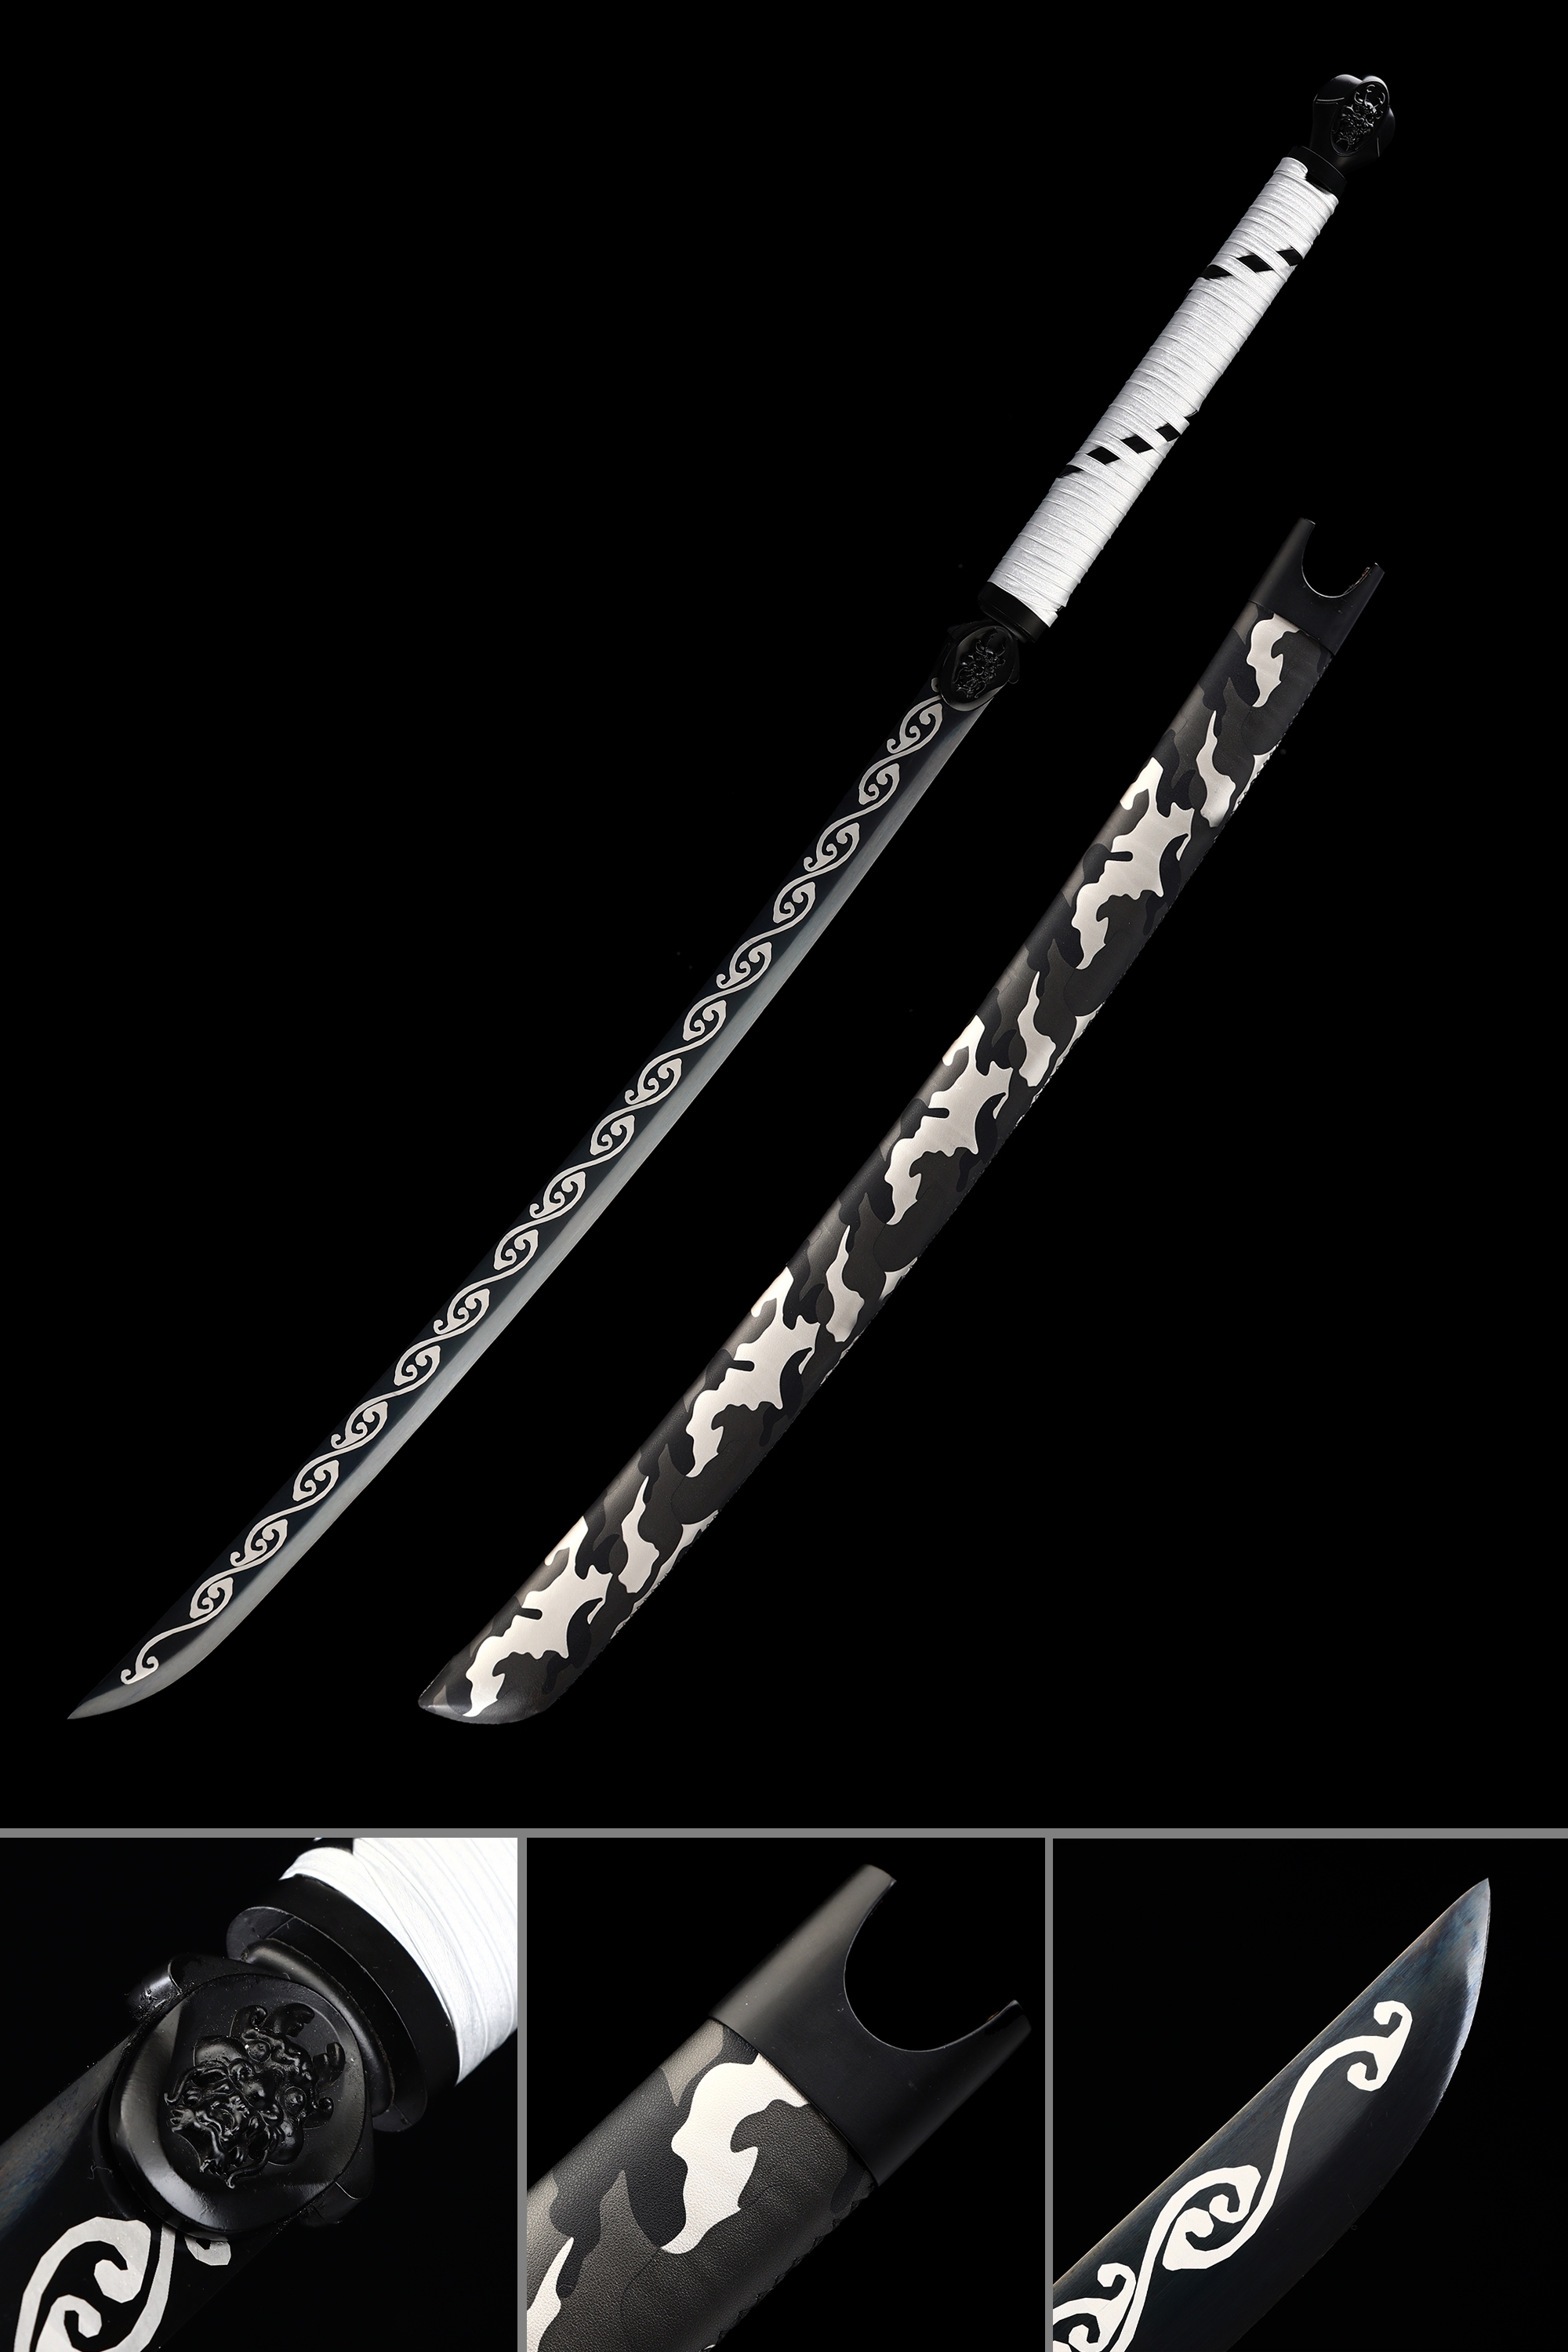 Handmade Japanese Katana Sword With Black Blade And Camouflage Scabbard